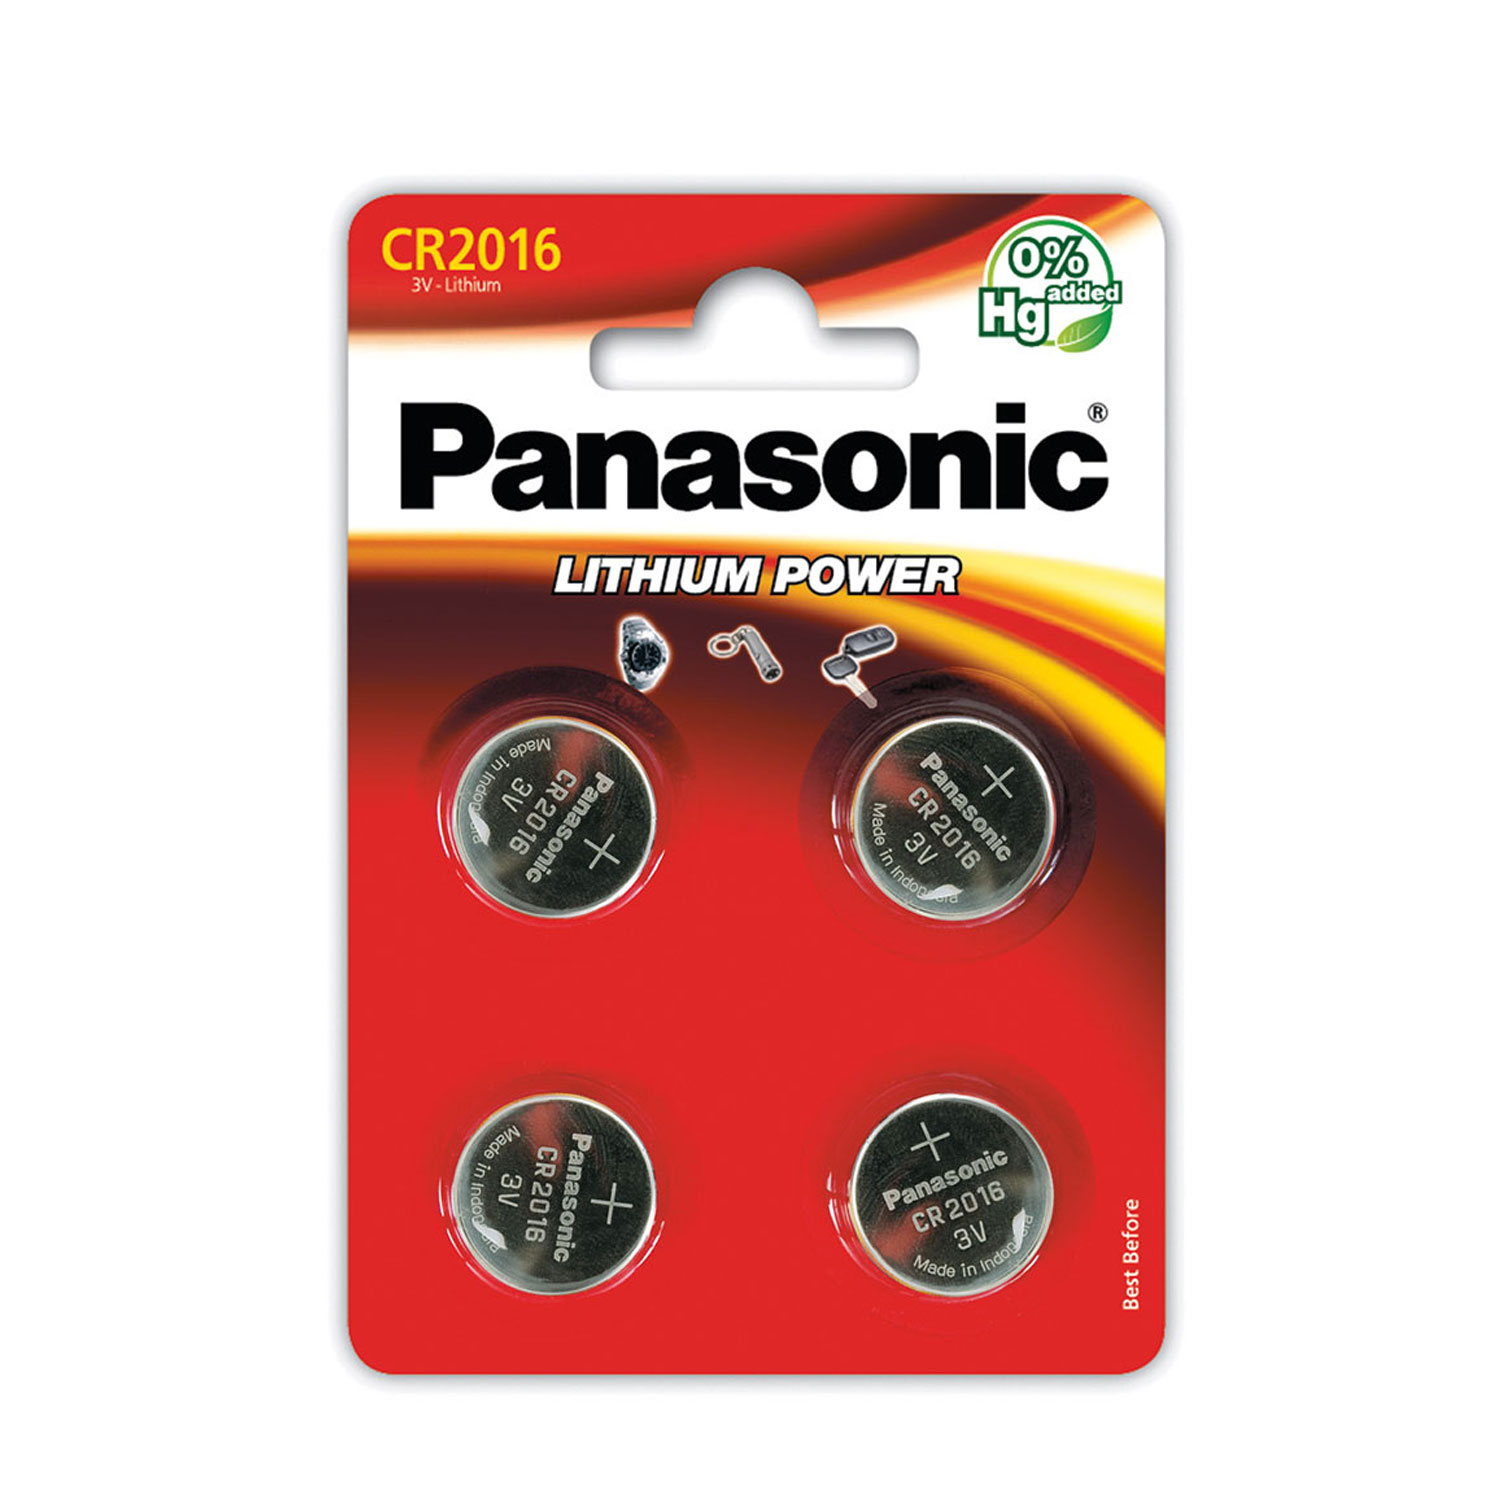 Элемент питания b. Батарейка дисковая литиевая cr2032- 4 шт. Батарейка Panasonic cr2032. Батарейка Panasonic cr2025 b4. Элемент питания Panasonic Lithium Power cr2032.